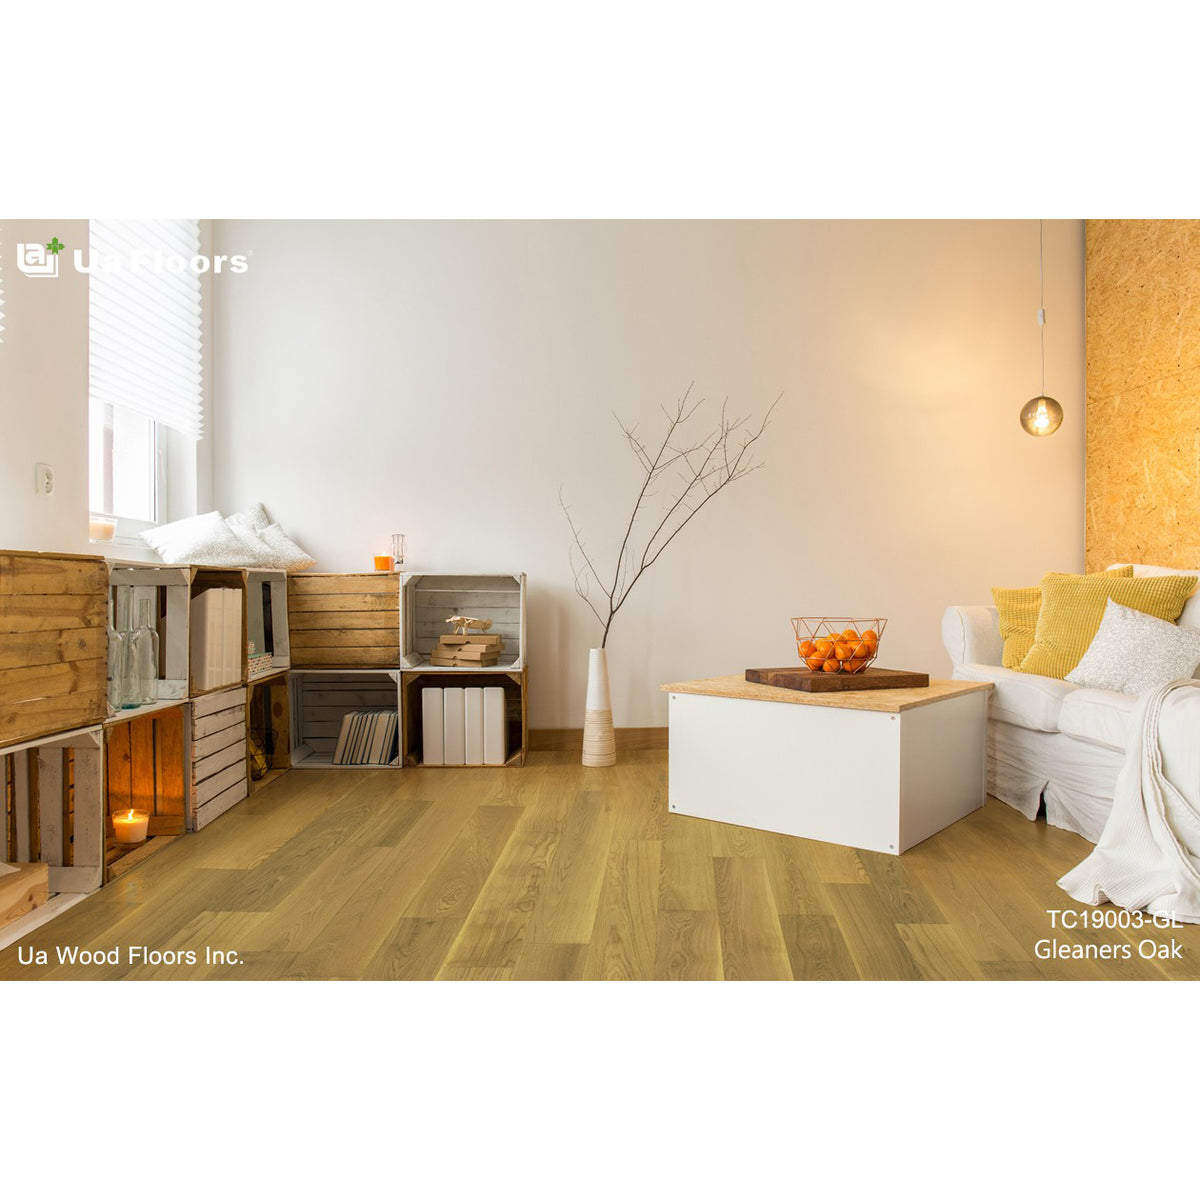 Ua Floors - Classics Collection - Gleaners Euro Oak Room Scene